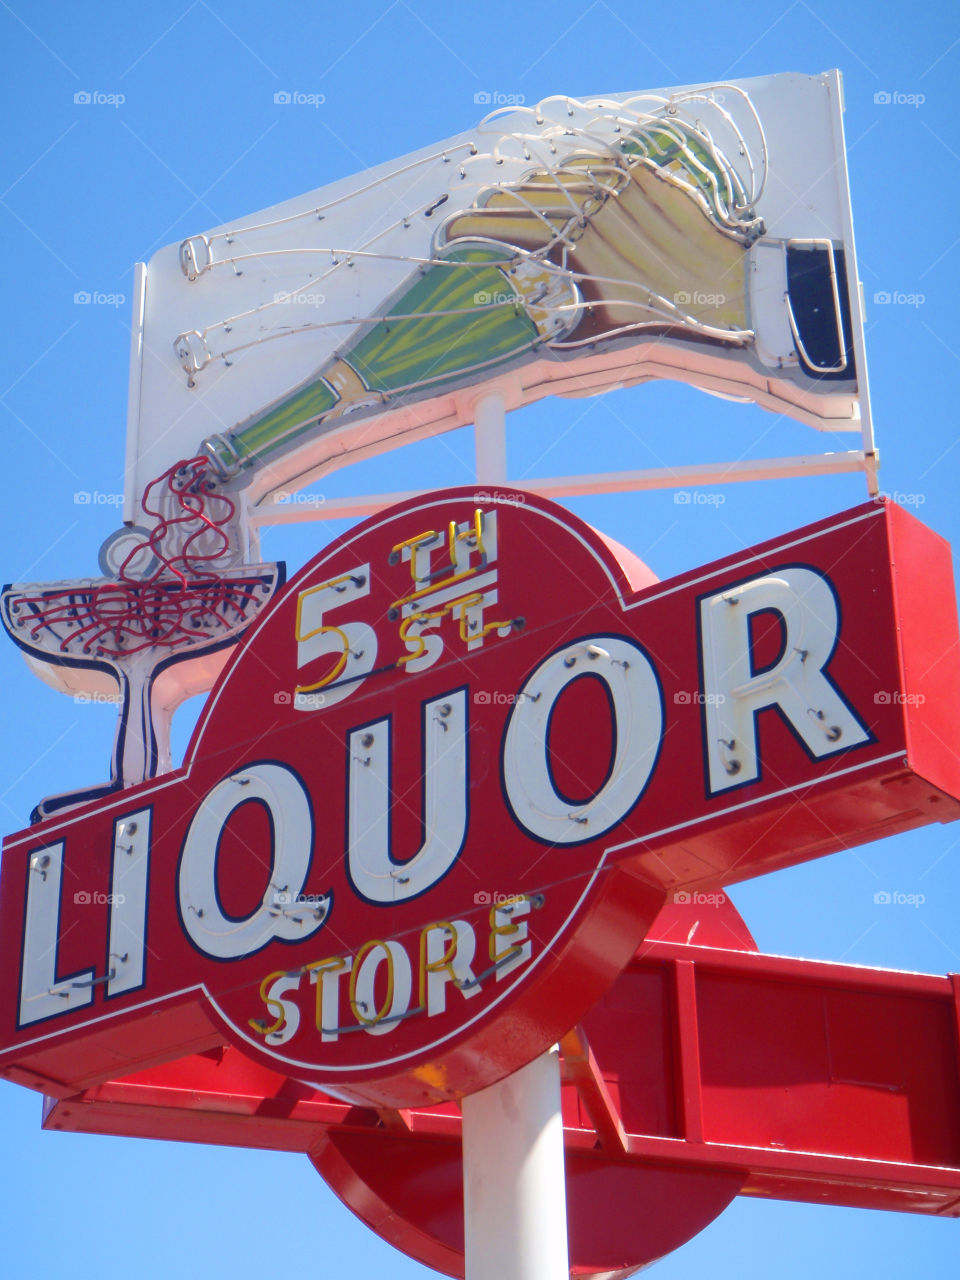 Neon Liquor Sign
Las Vegas, Nevada